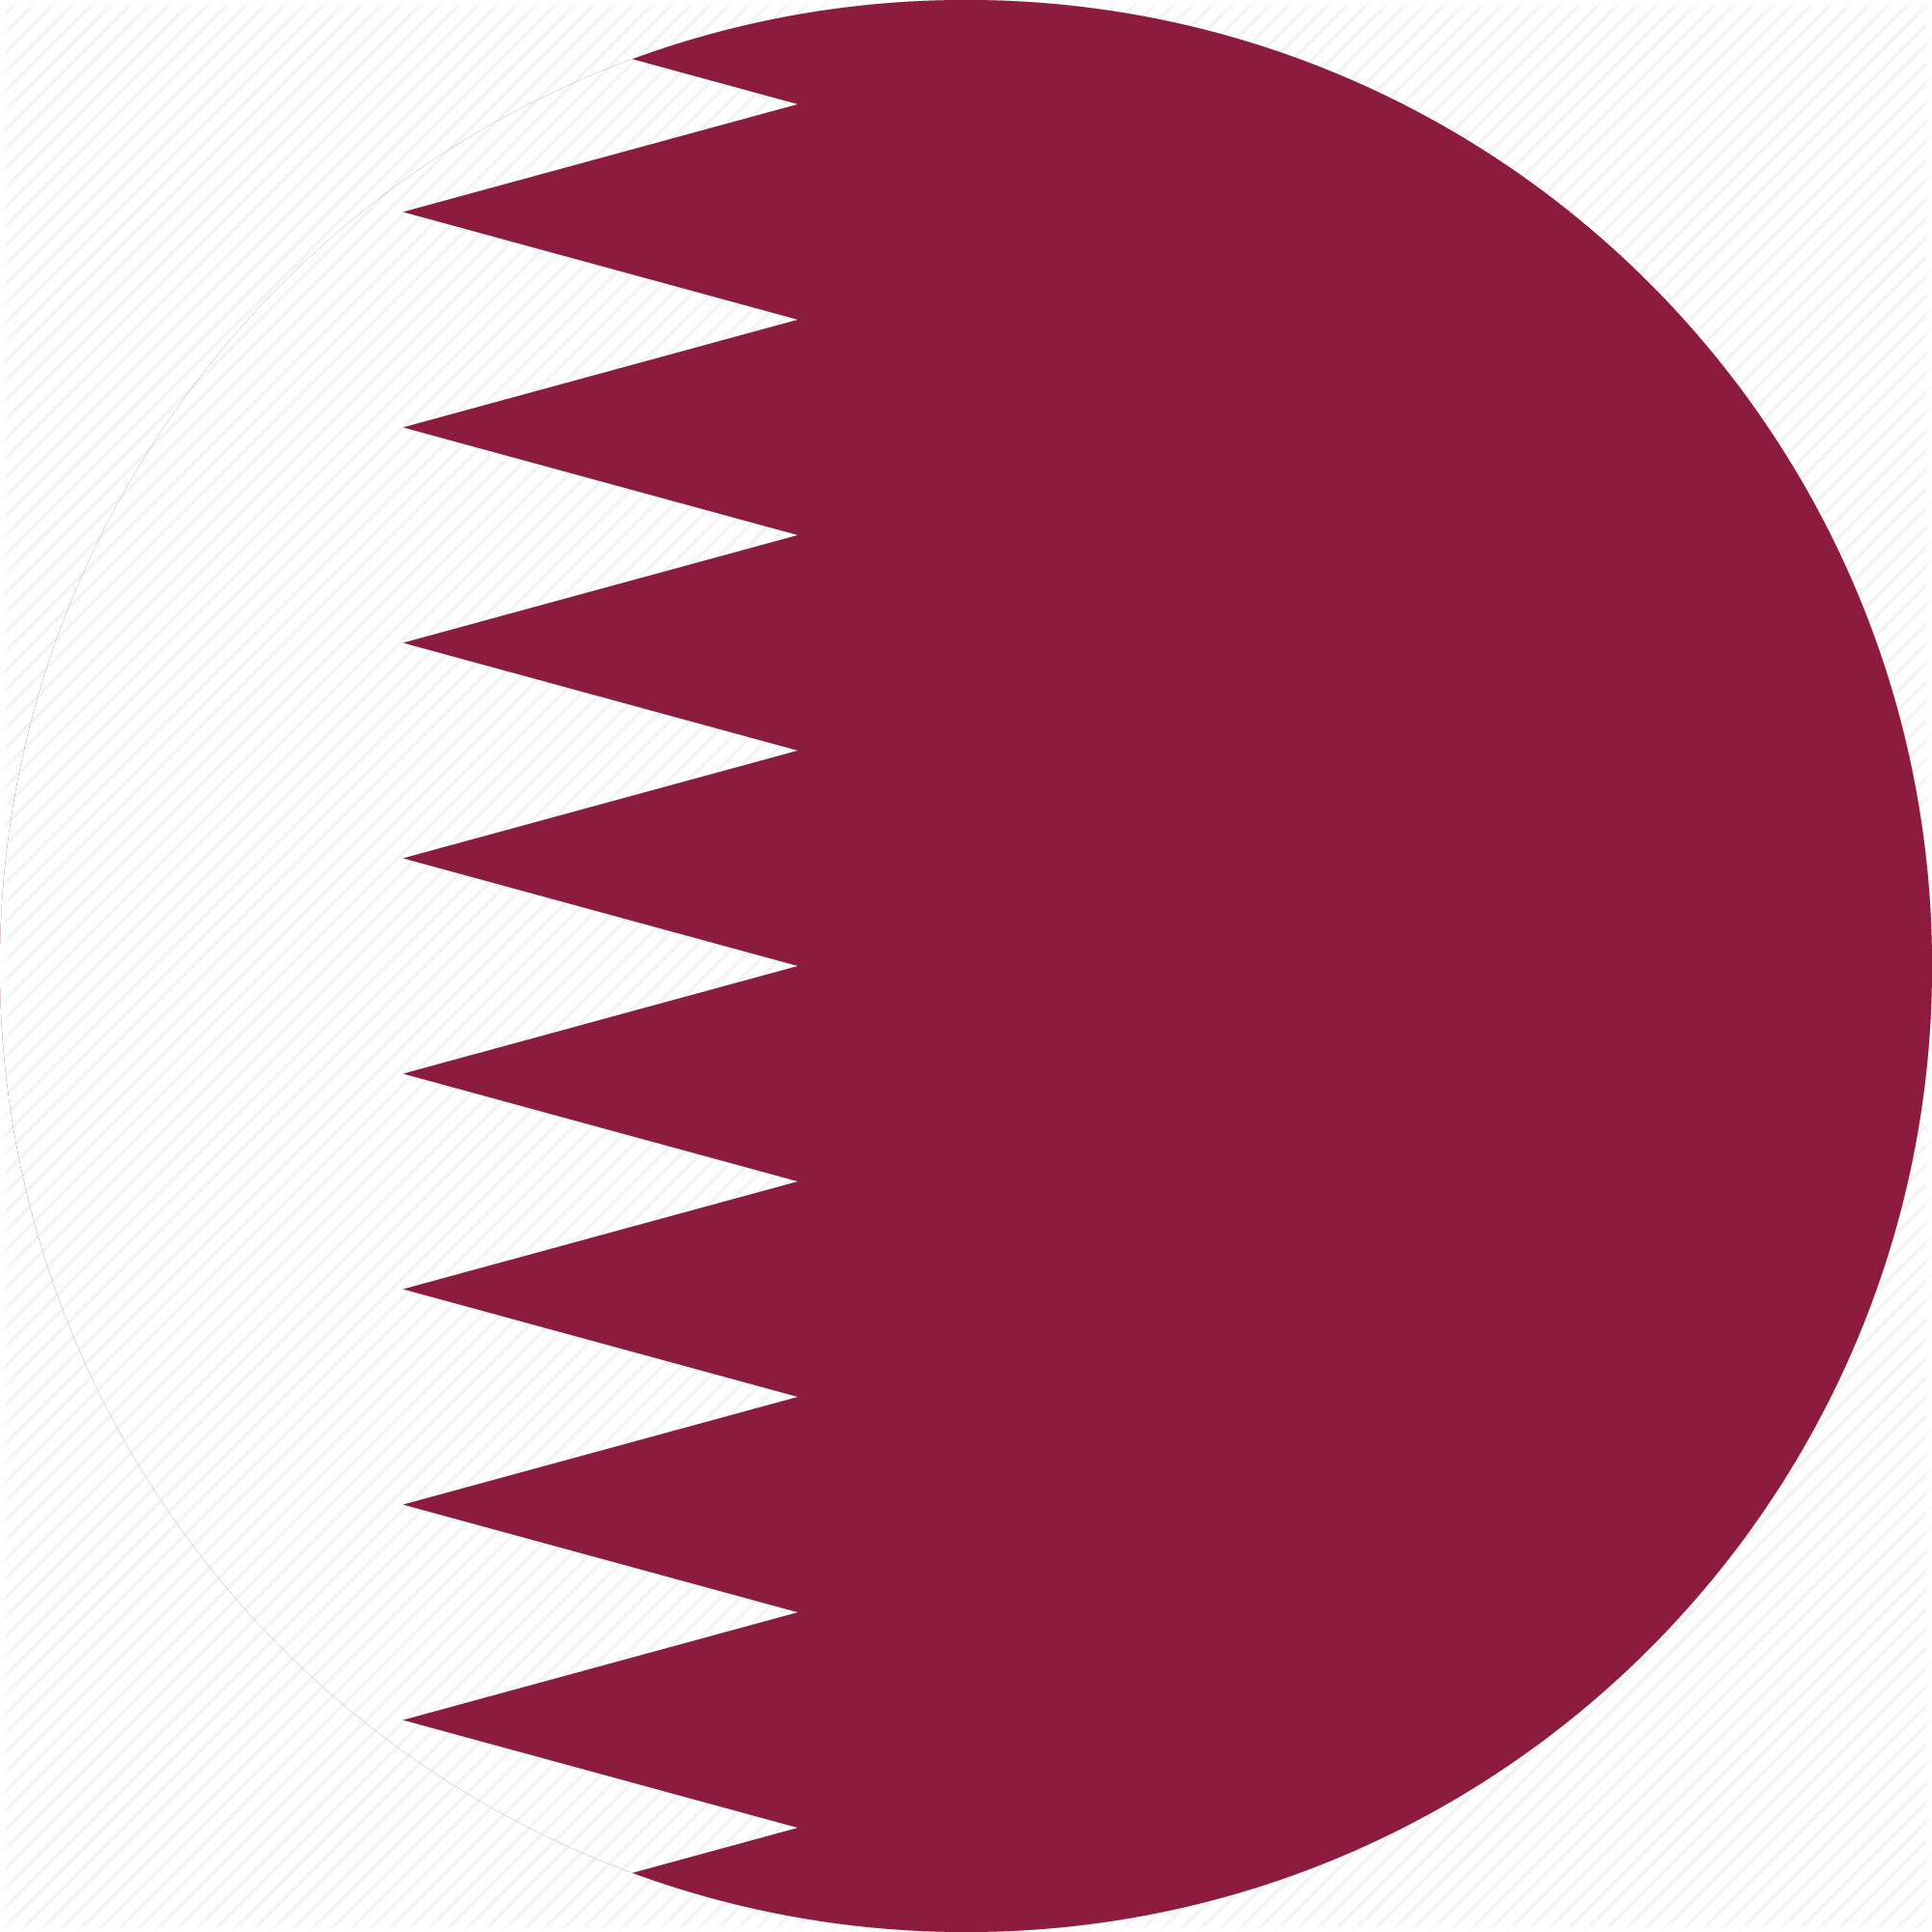 Qatar flag 6 » Image